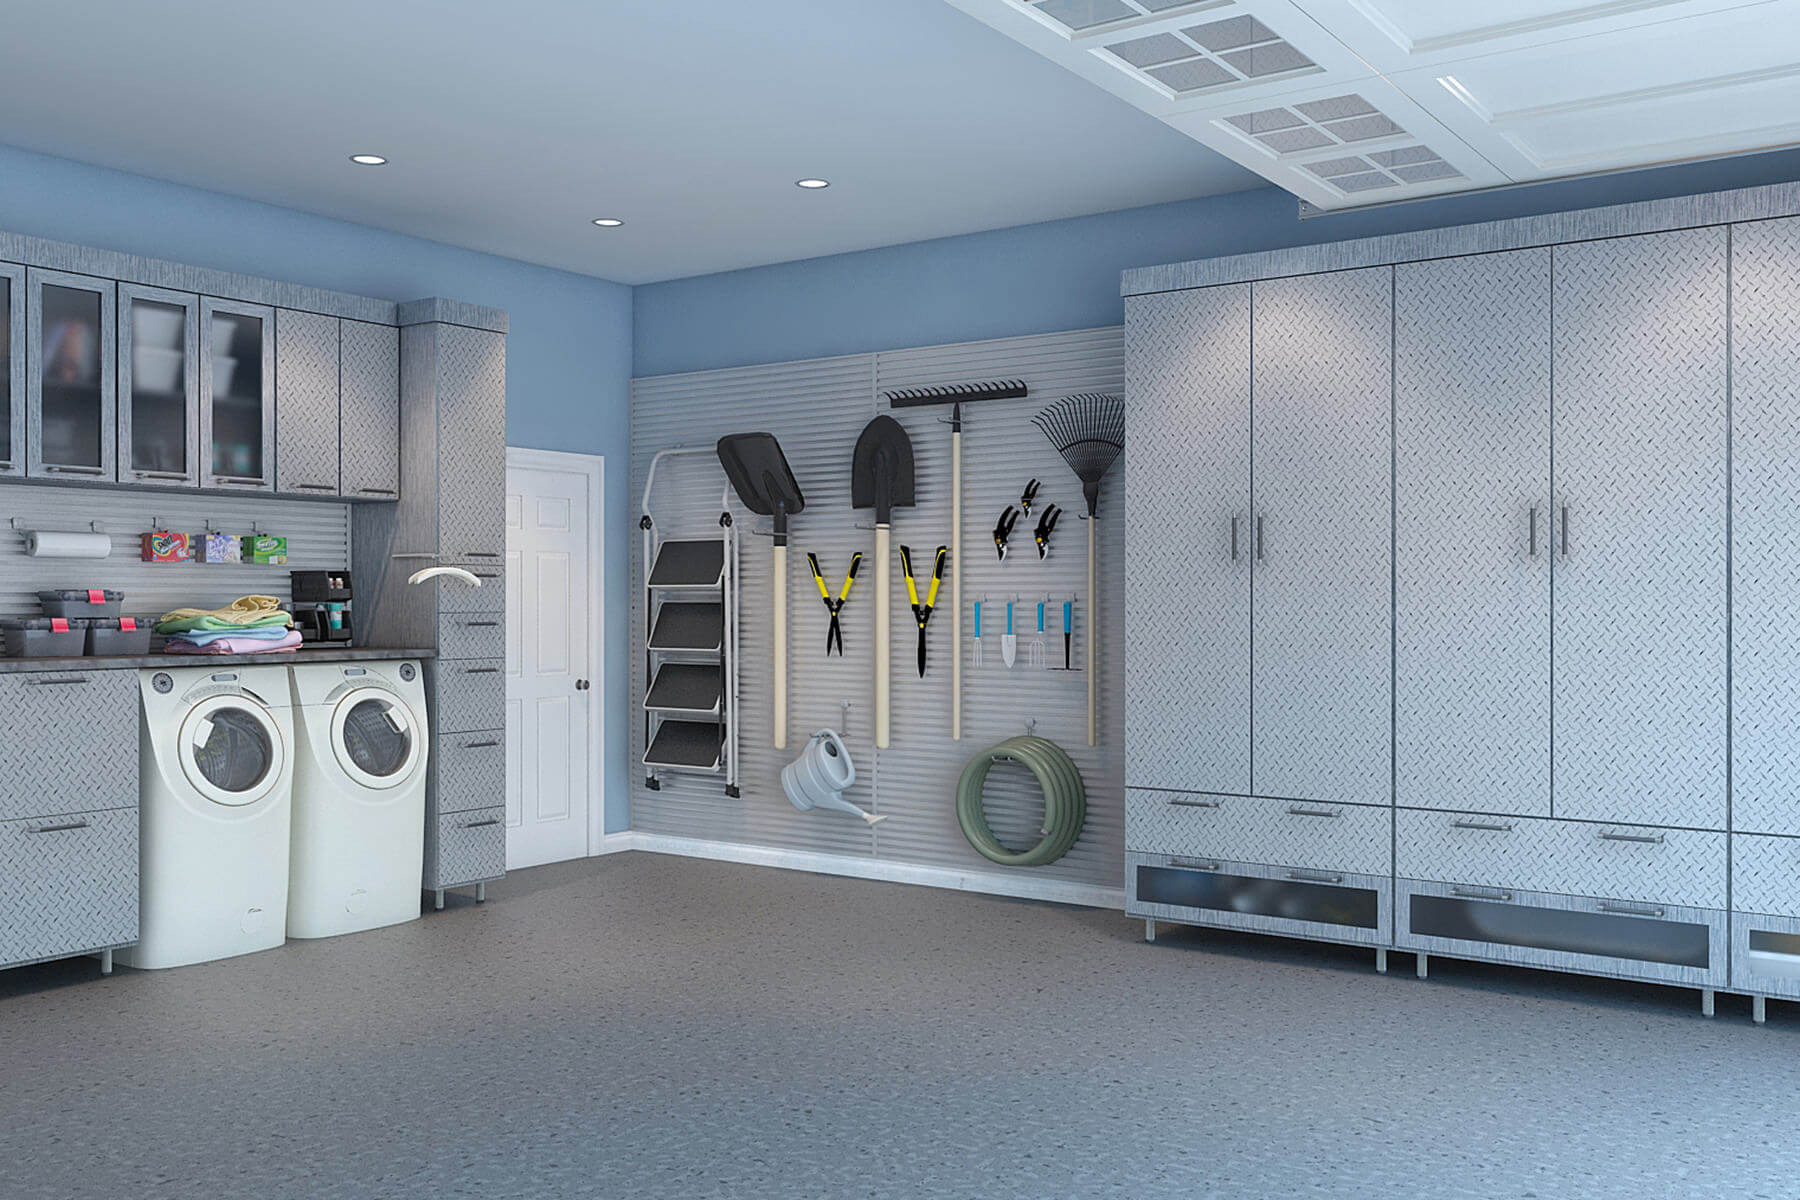 Best ideas about Garage Laundry Room Ideas
. Save or Pin 29 Garage Storage Ideas Plus 3 Garage Man Caves Now.